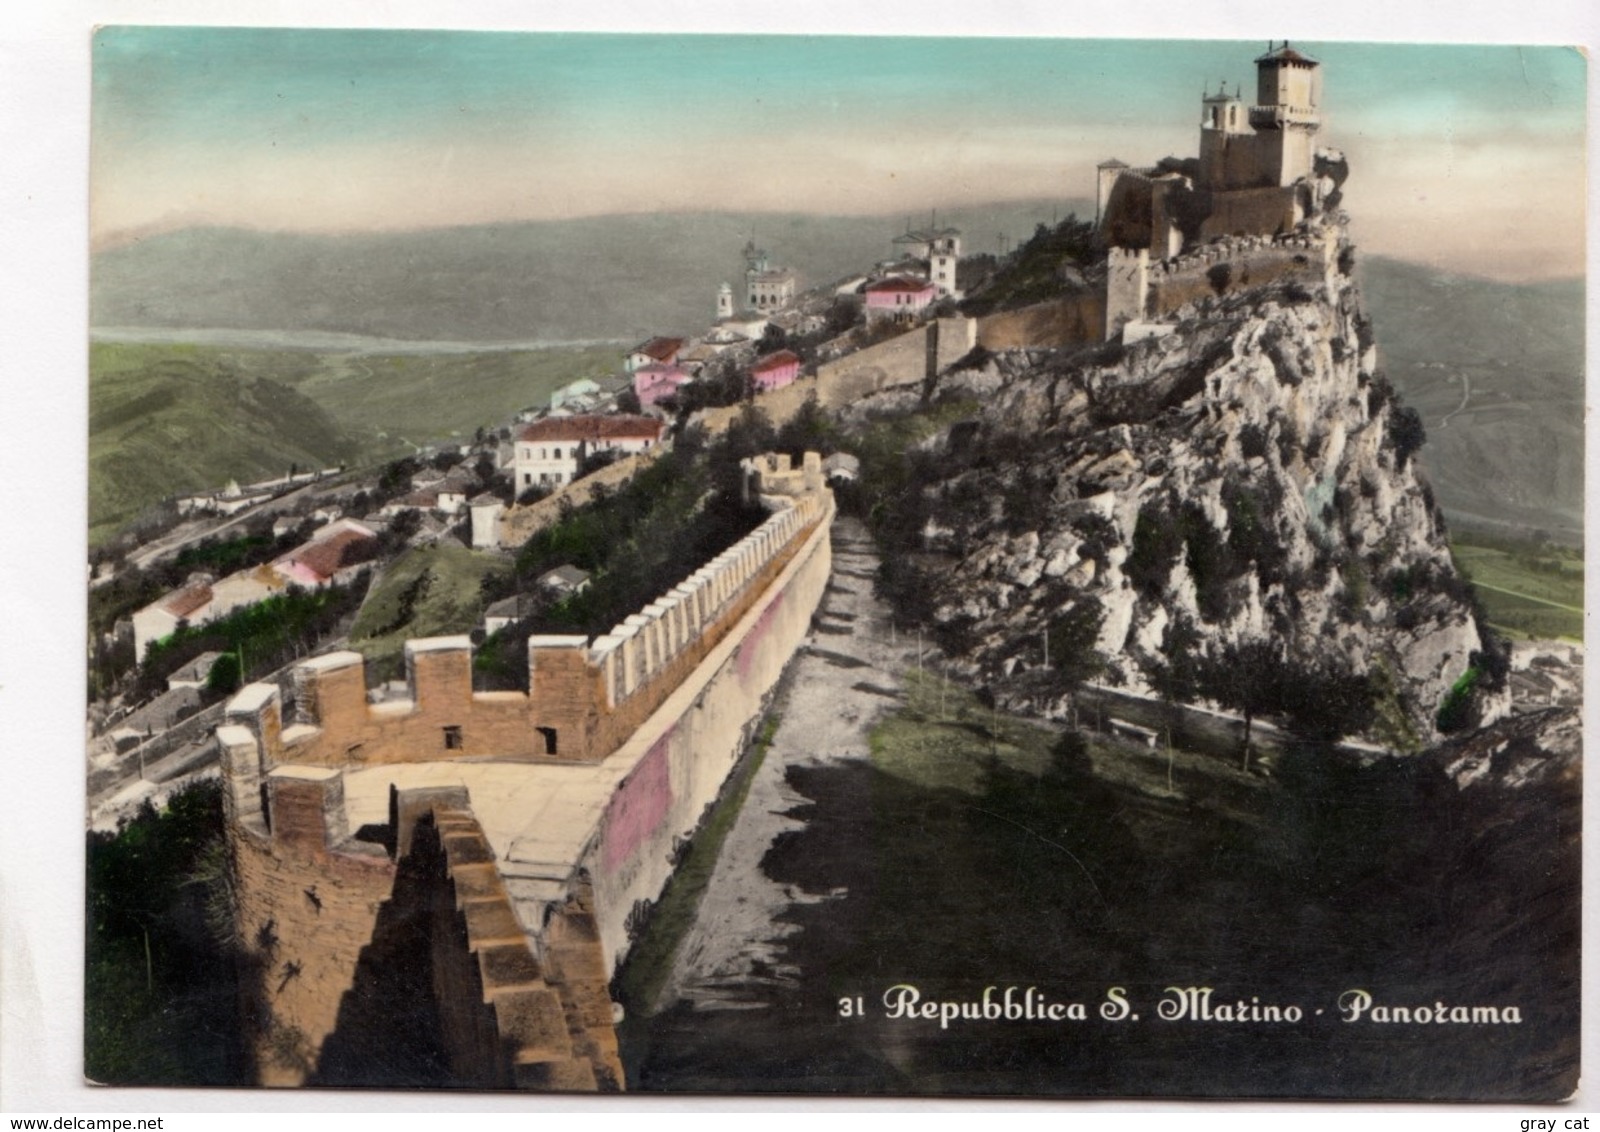 Repubblica S. Marino, Panorama, 1957 Used Postcard [23330] - San Marino